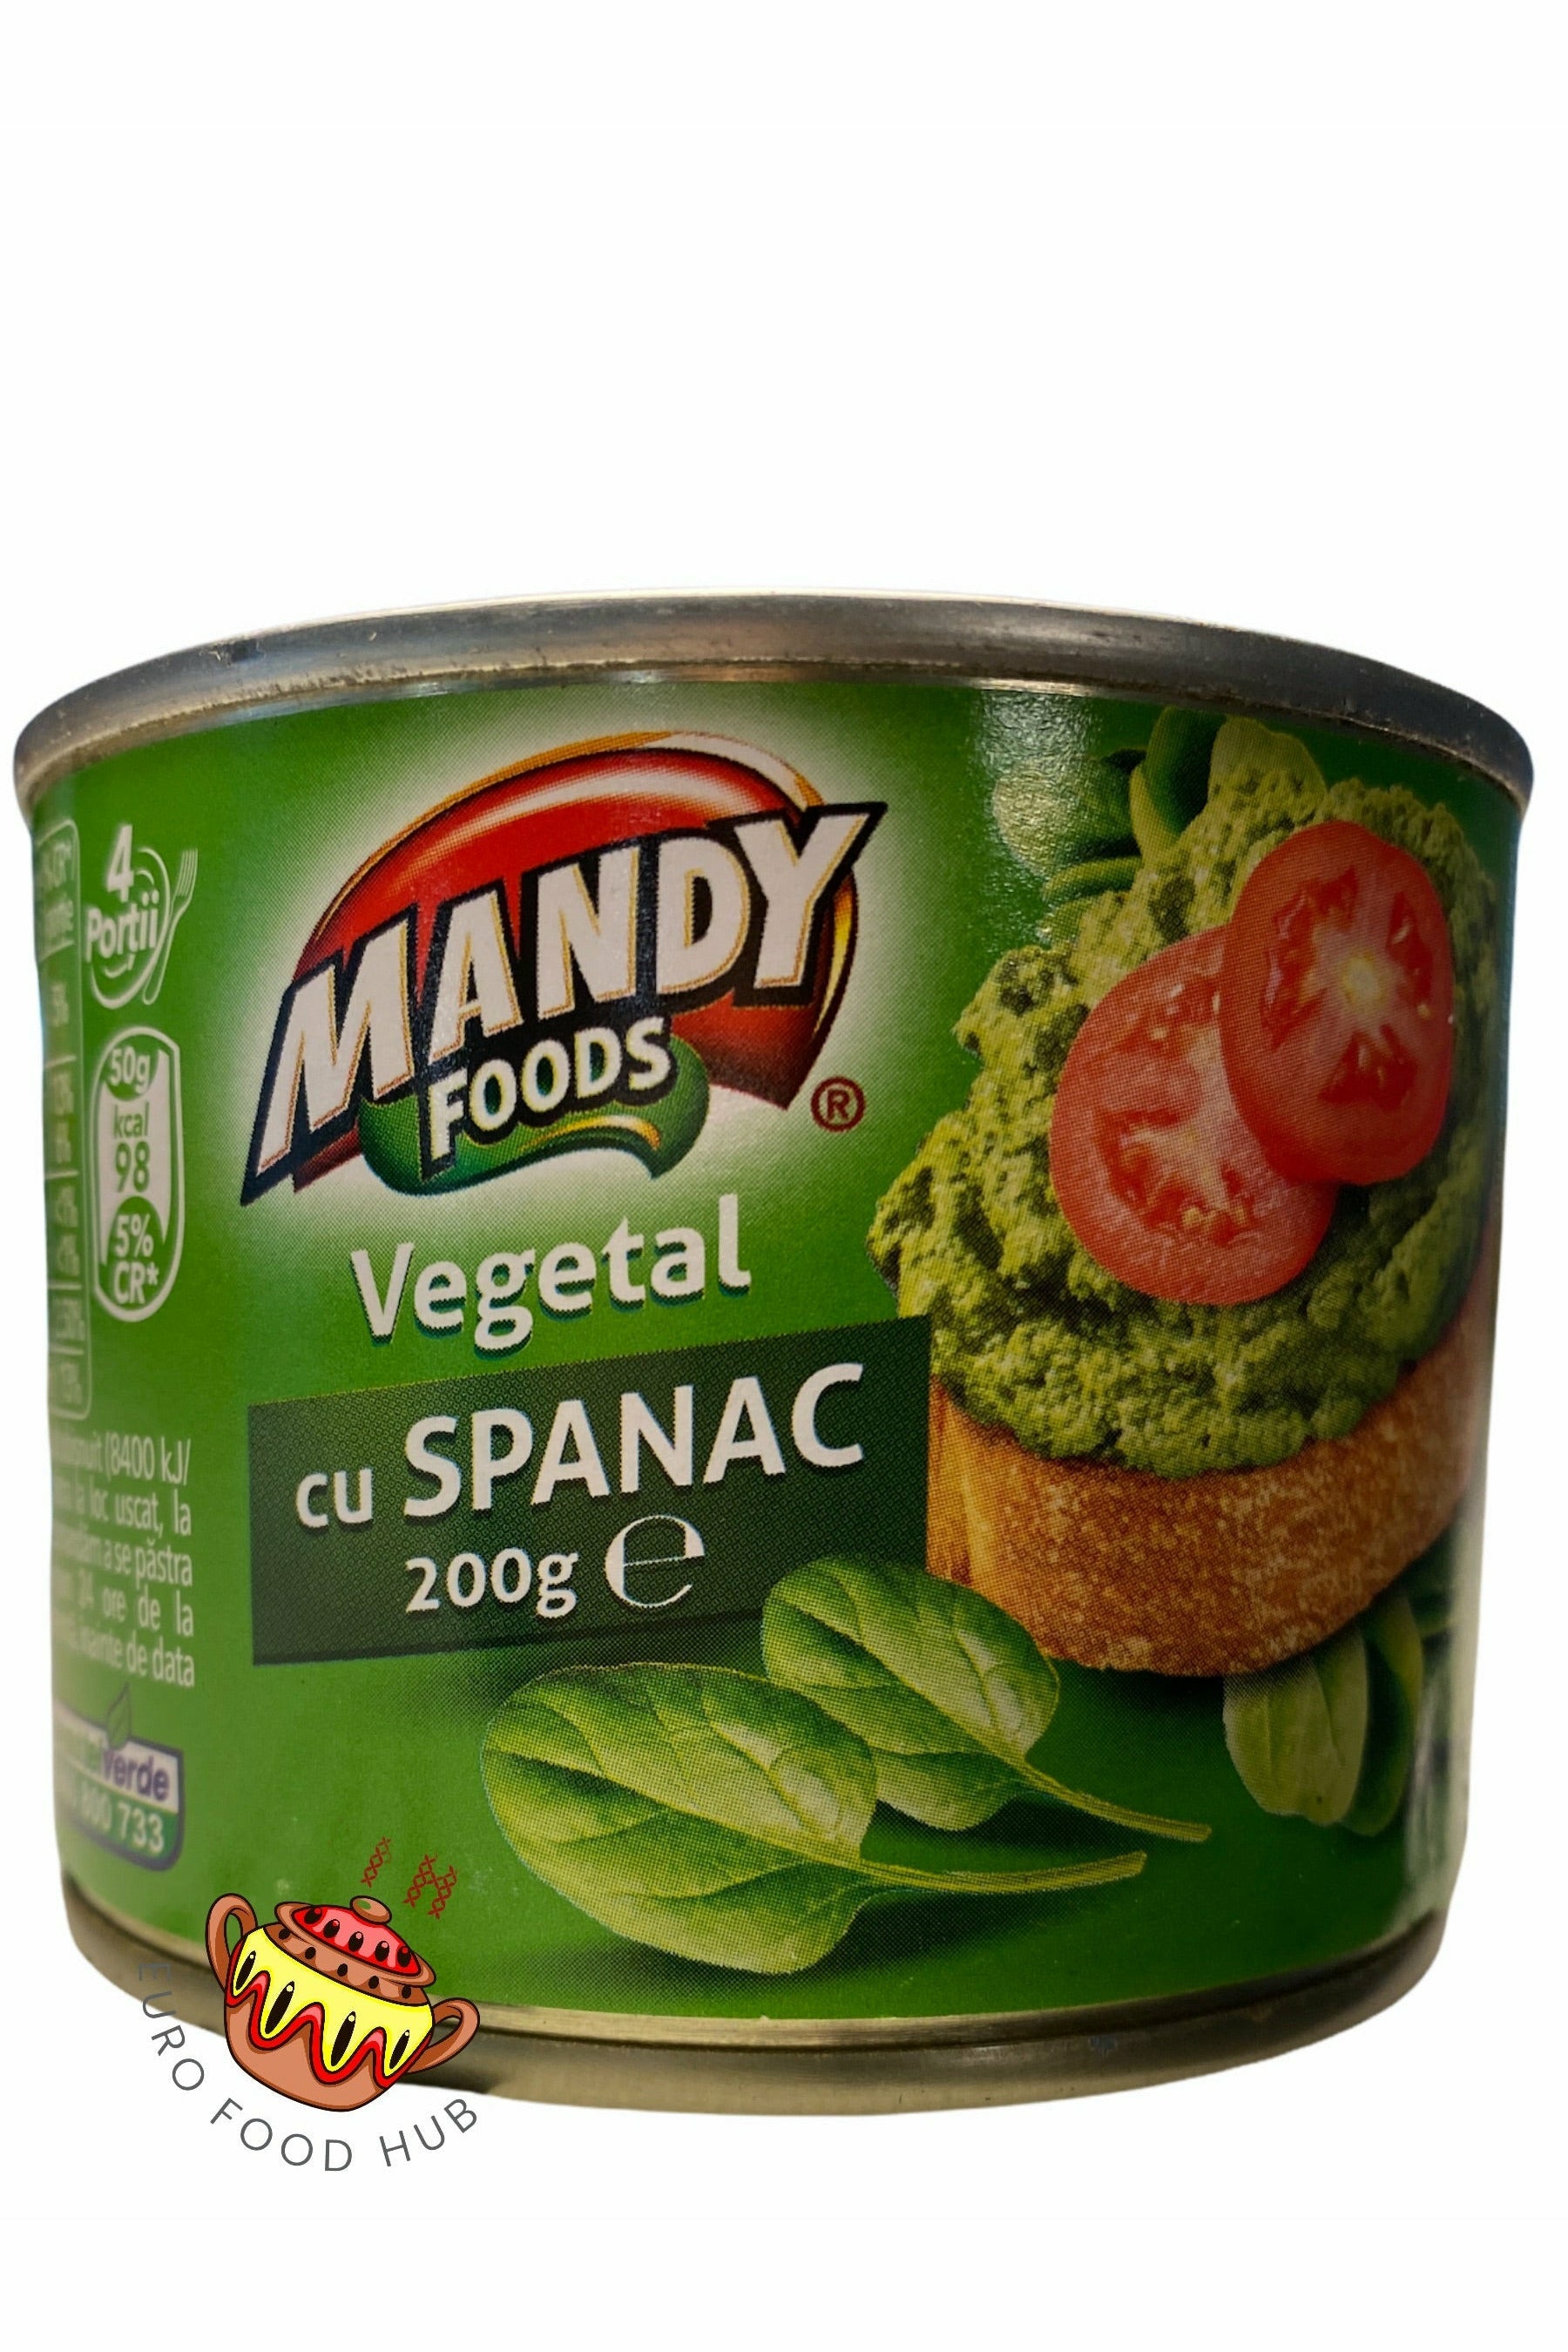 Vegetarian Pate - SPINACH - Mandy Foods